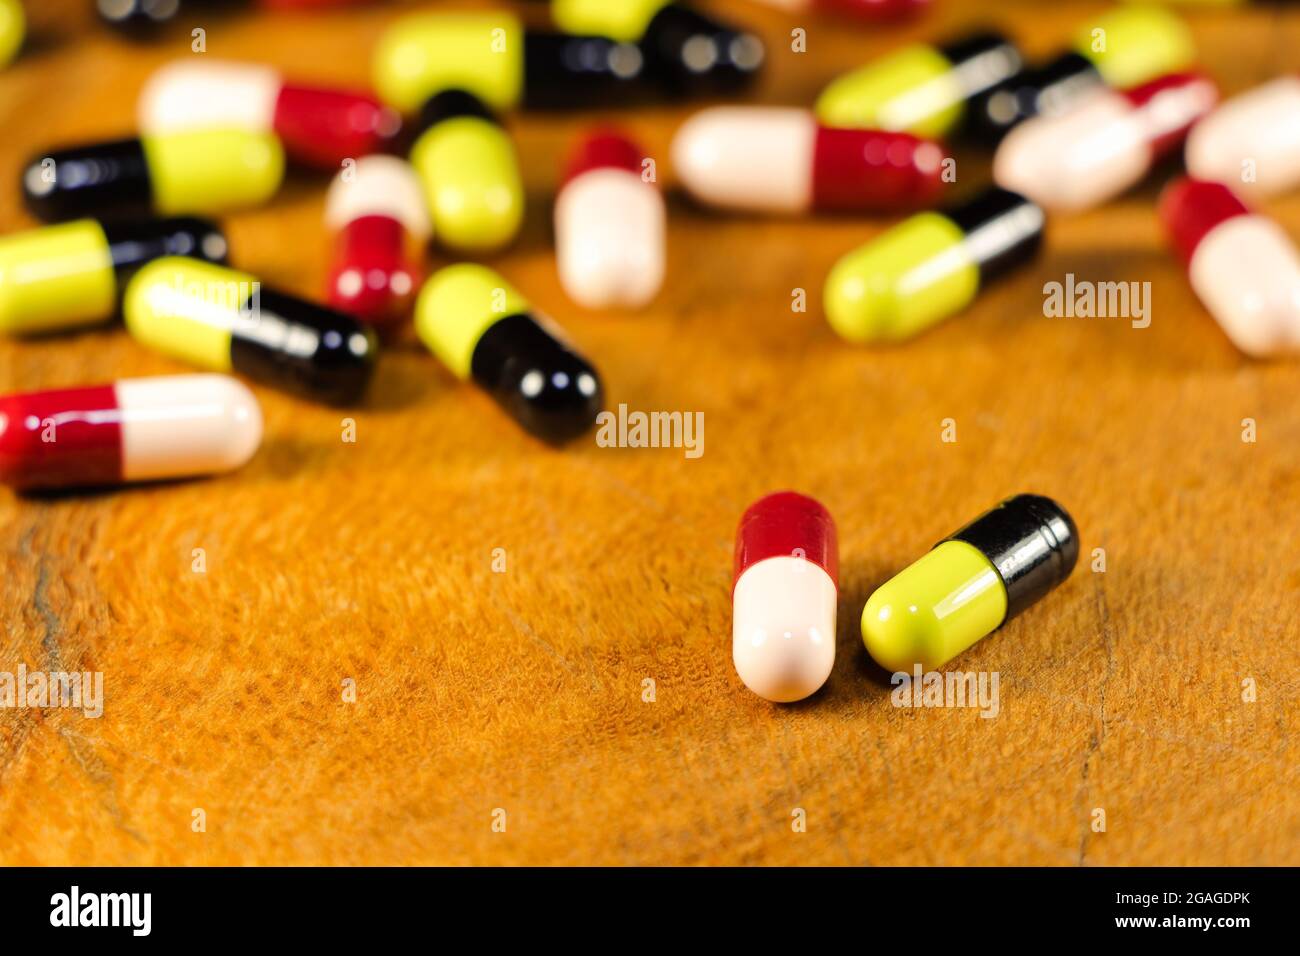 Prescription Drug Capsules On Wood Surface Close-up Stock Photo